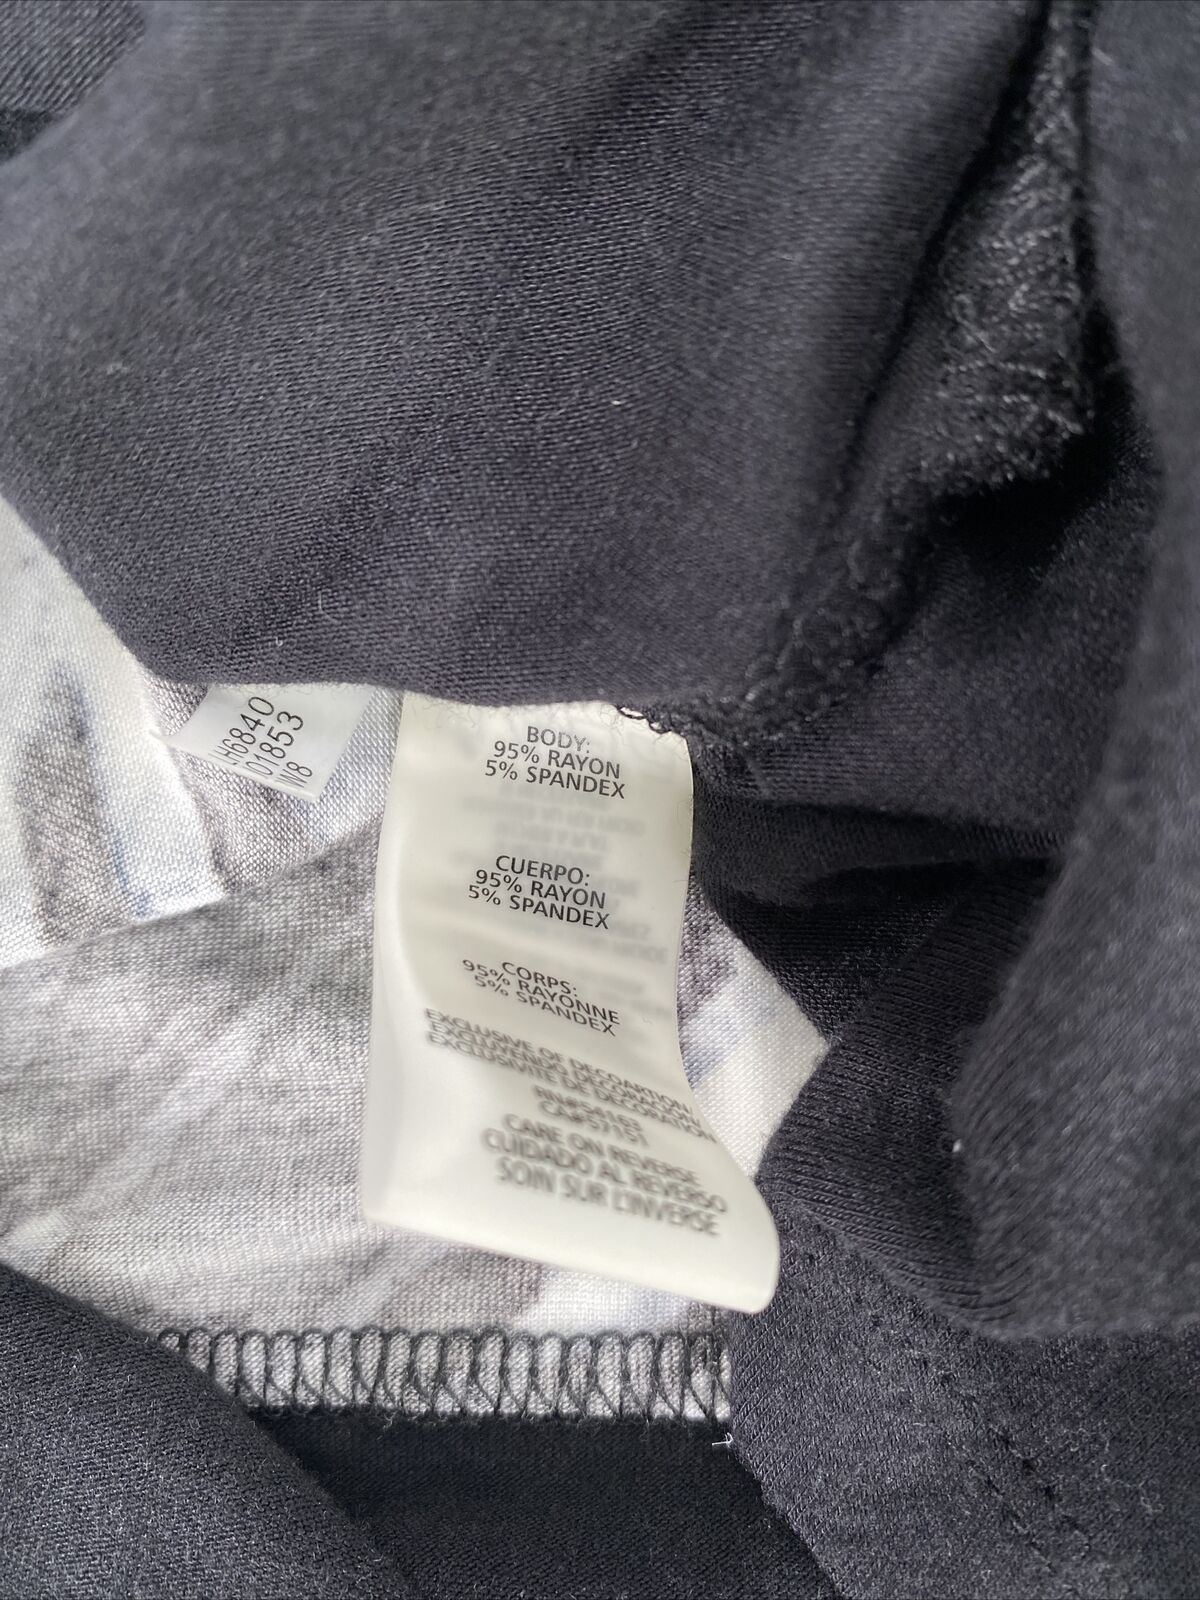 Calvin Klein Blusa tipo túnica de manga larga negra/blanca para mujer - M